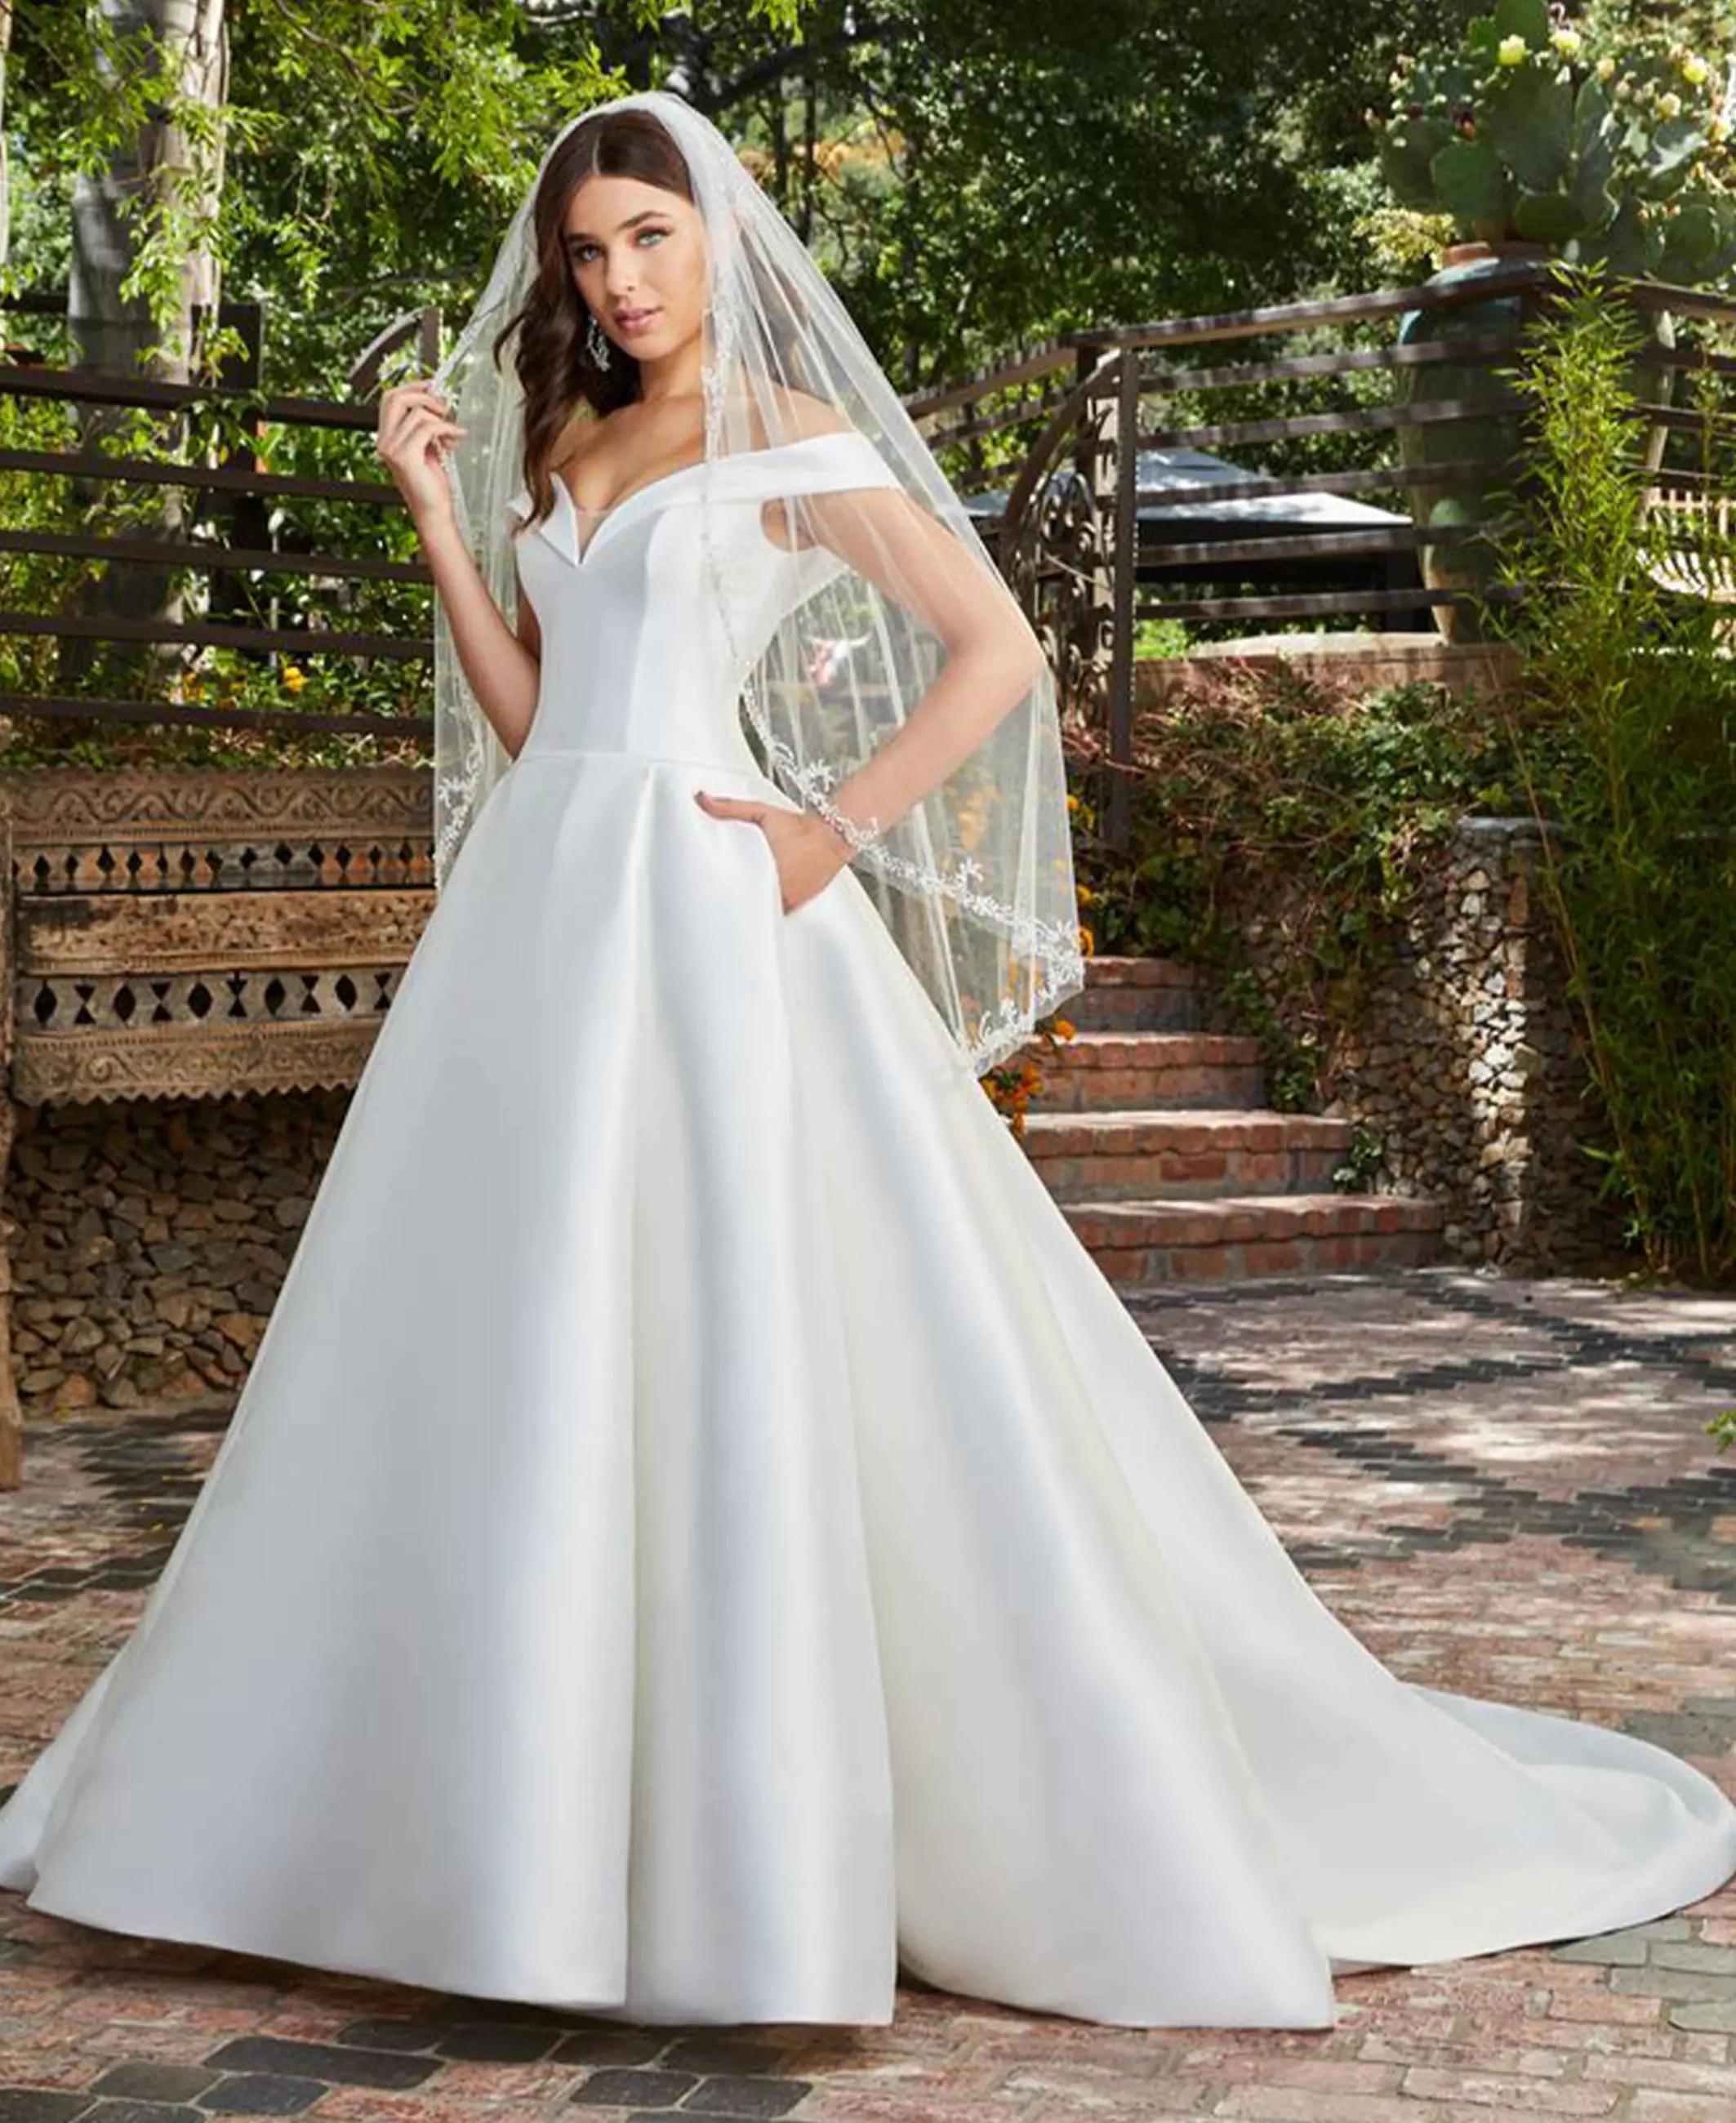 Model wearing white Casablanca Wedding Gown. Mobile